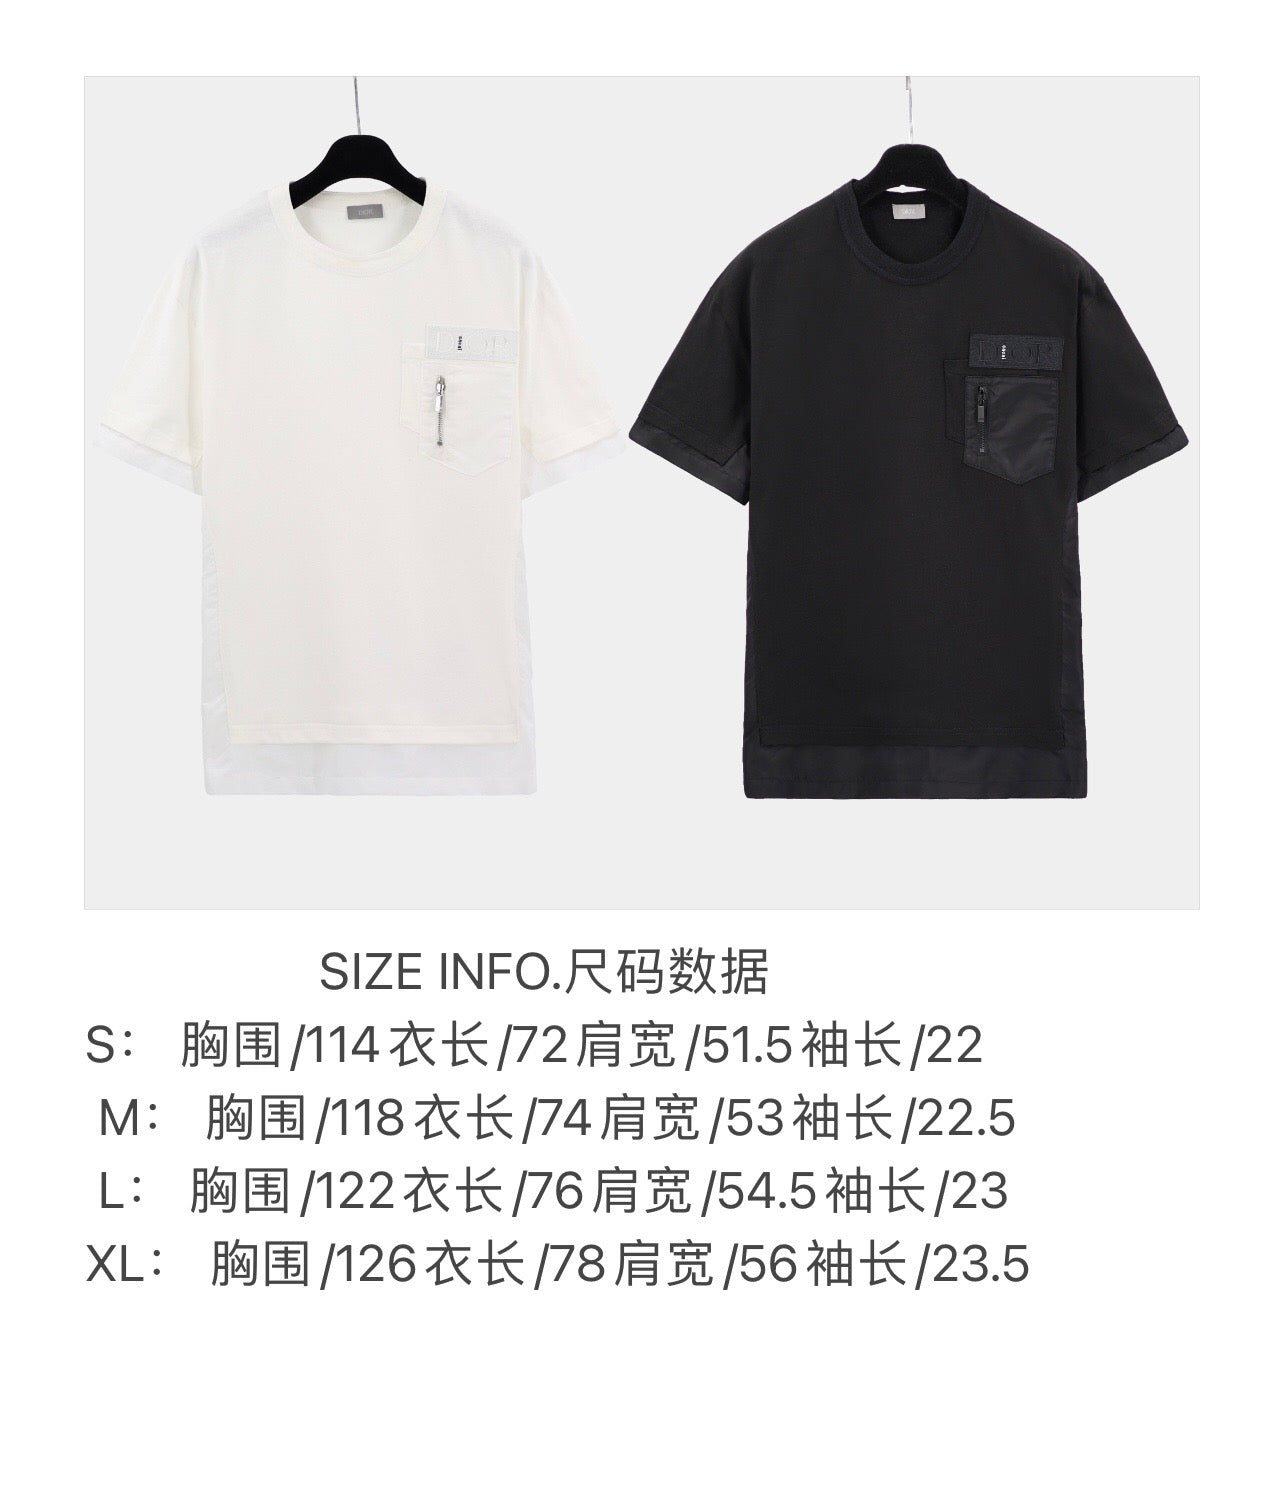 Black and white t-shirt